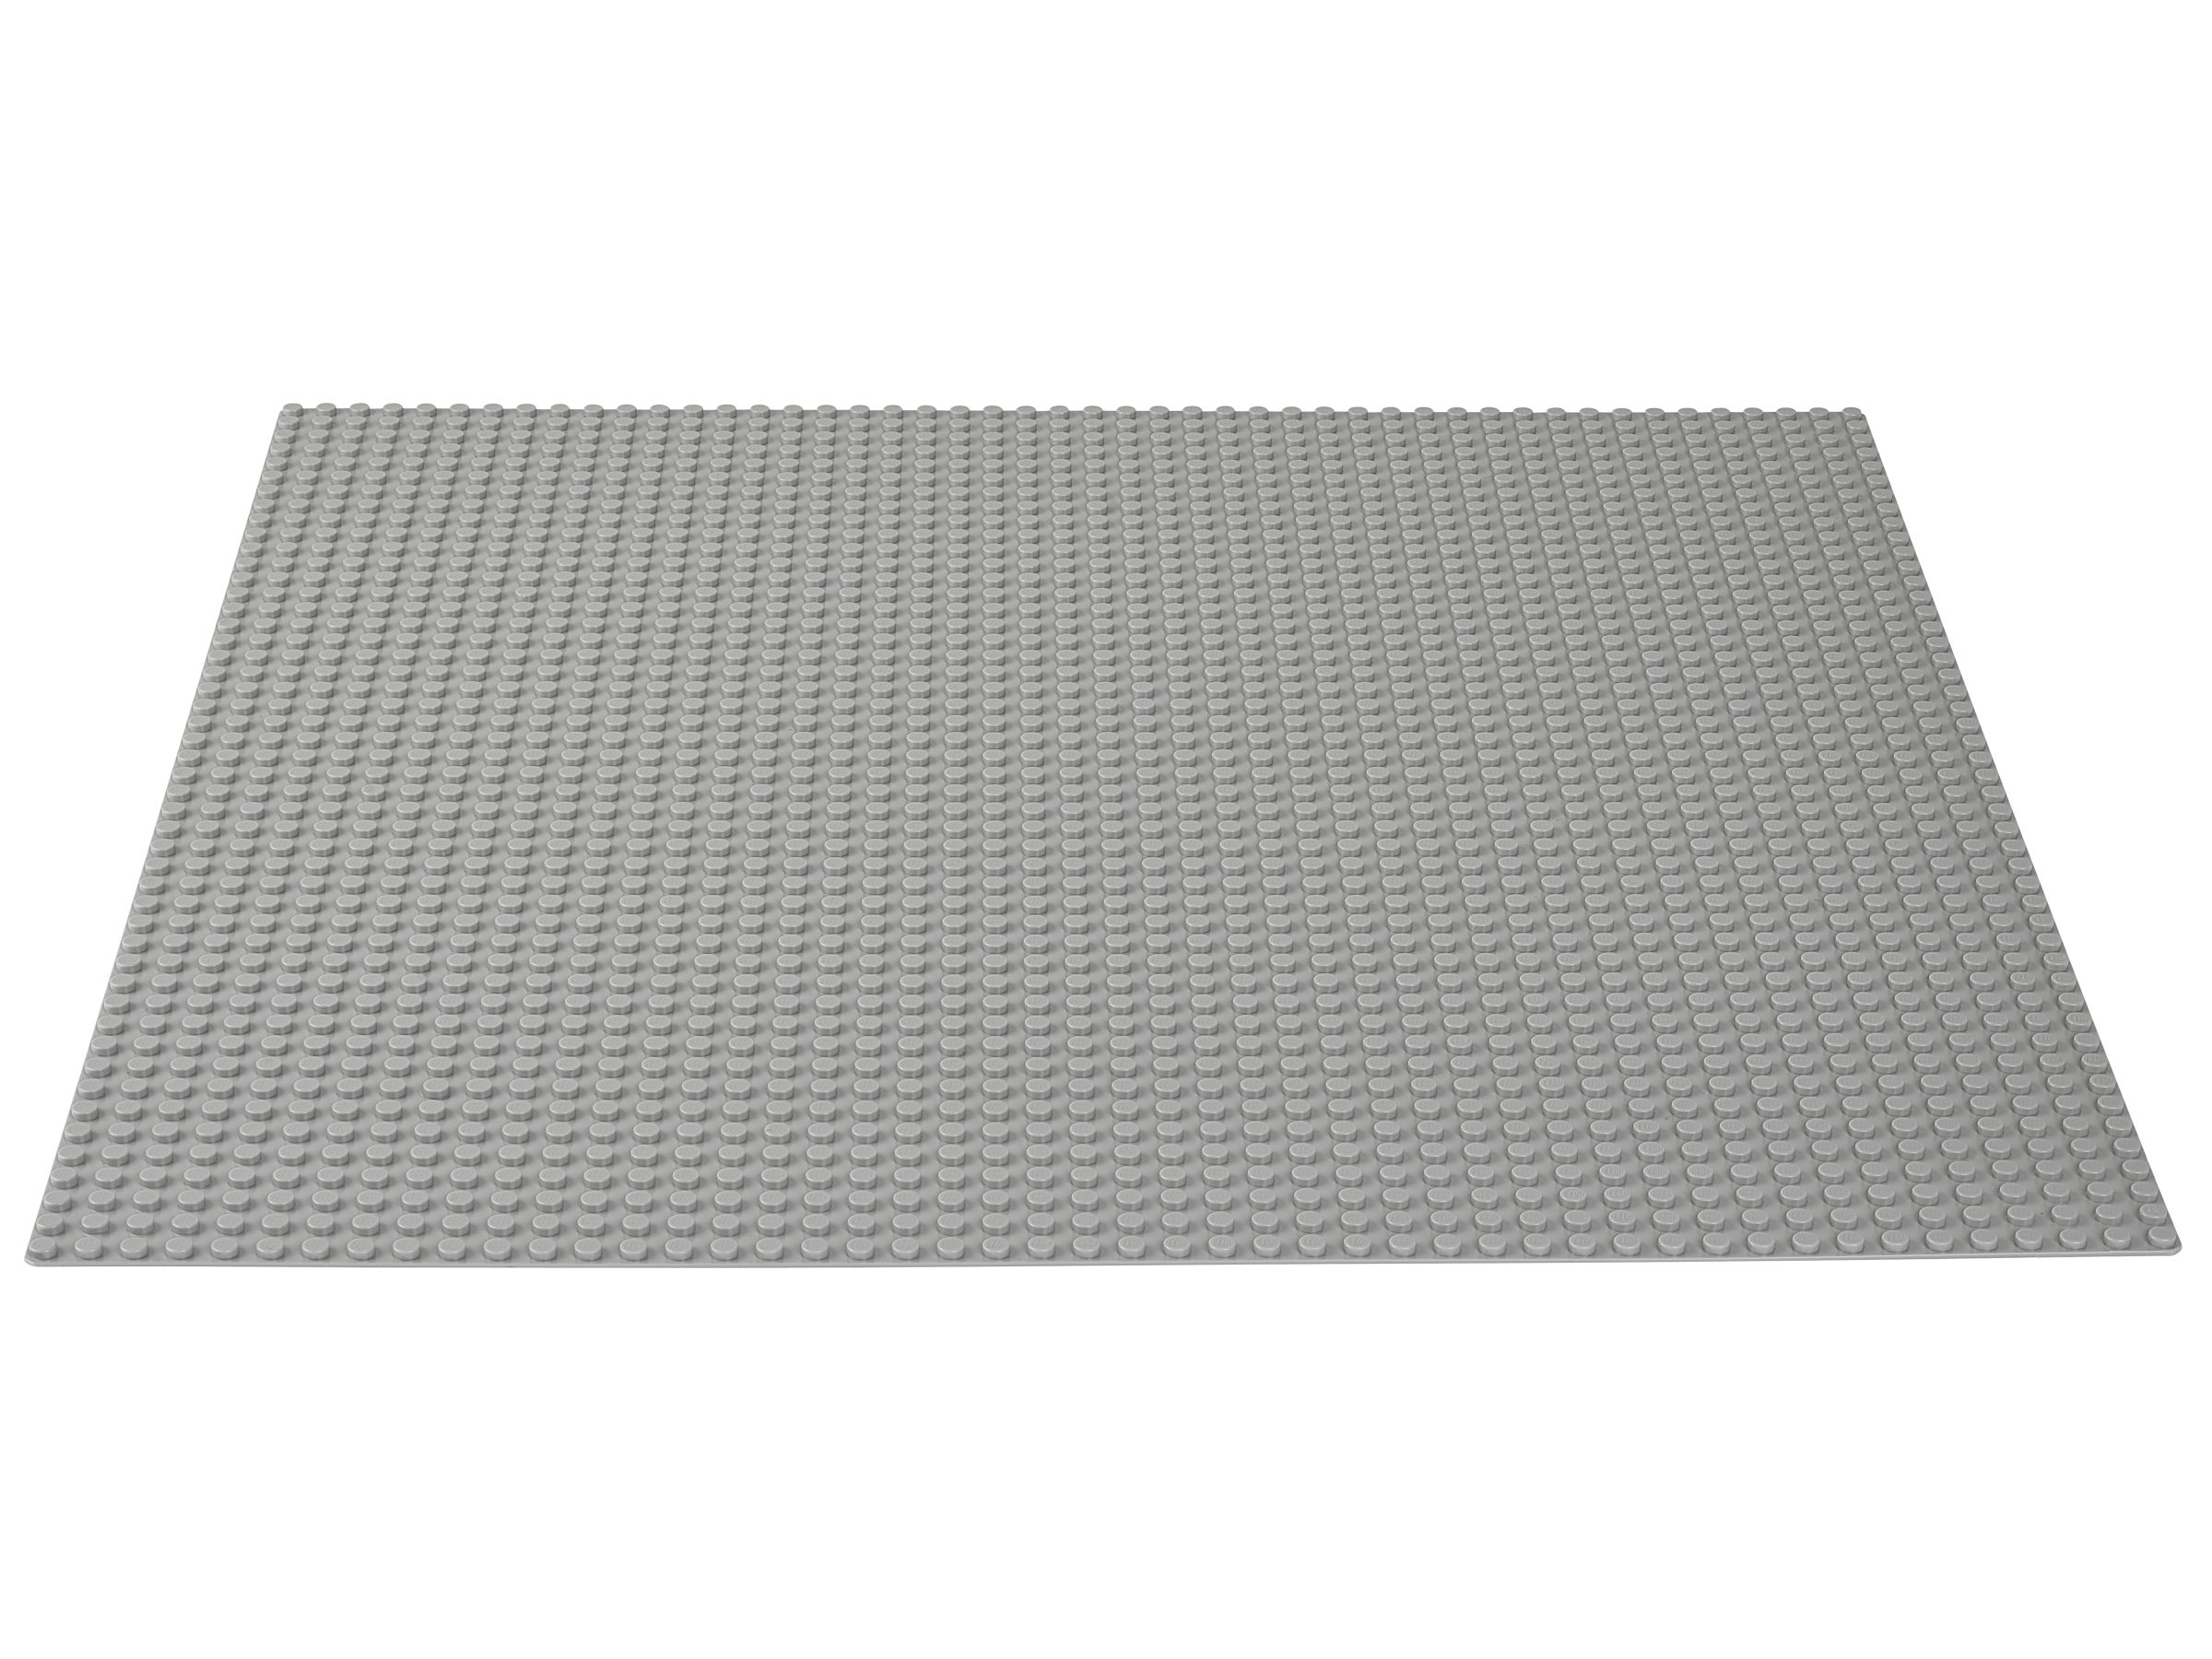 Lego ® Plaque de Base Plate 48x48 Bauplatte New Grey ref 10701 NEW 